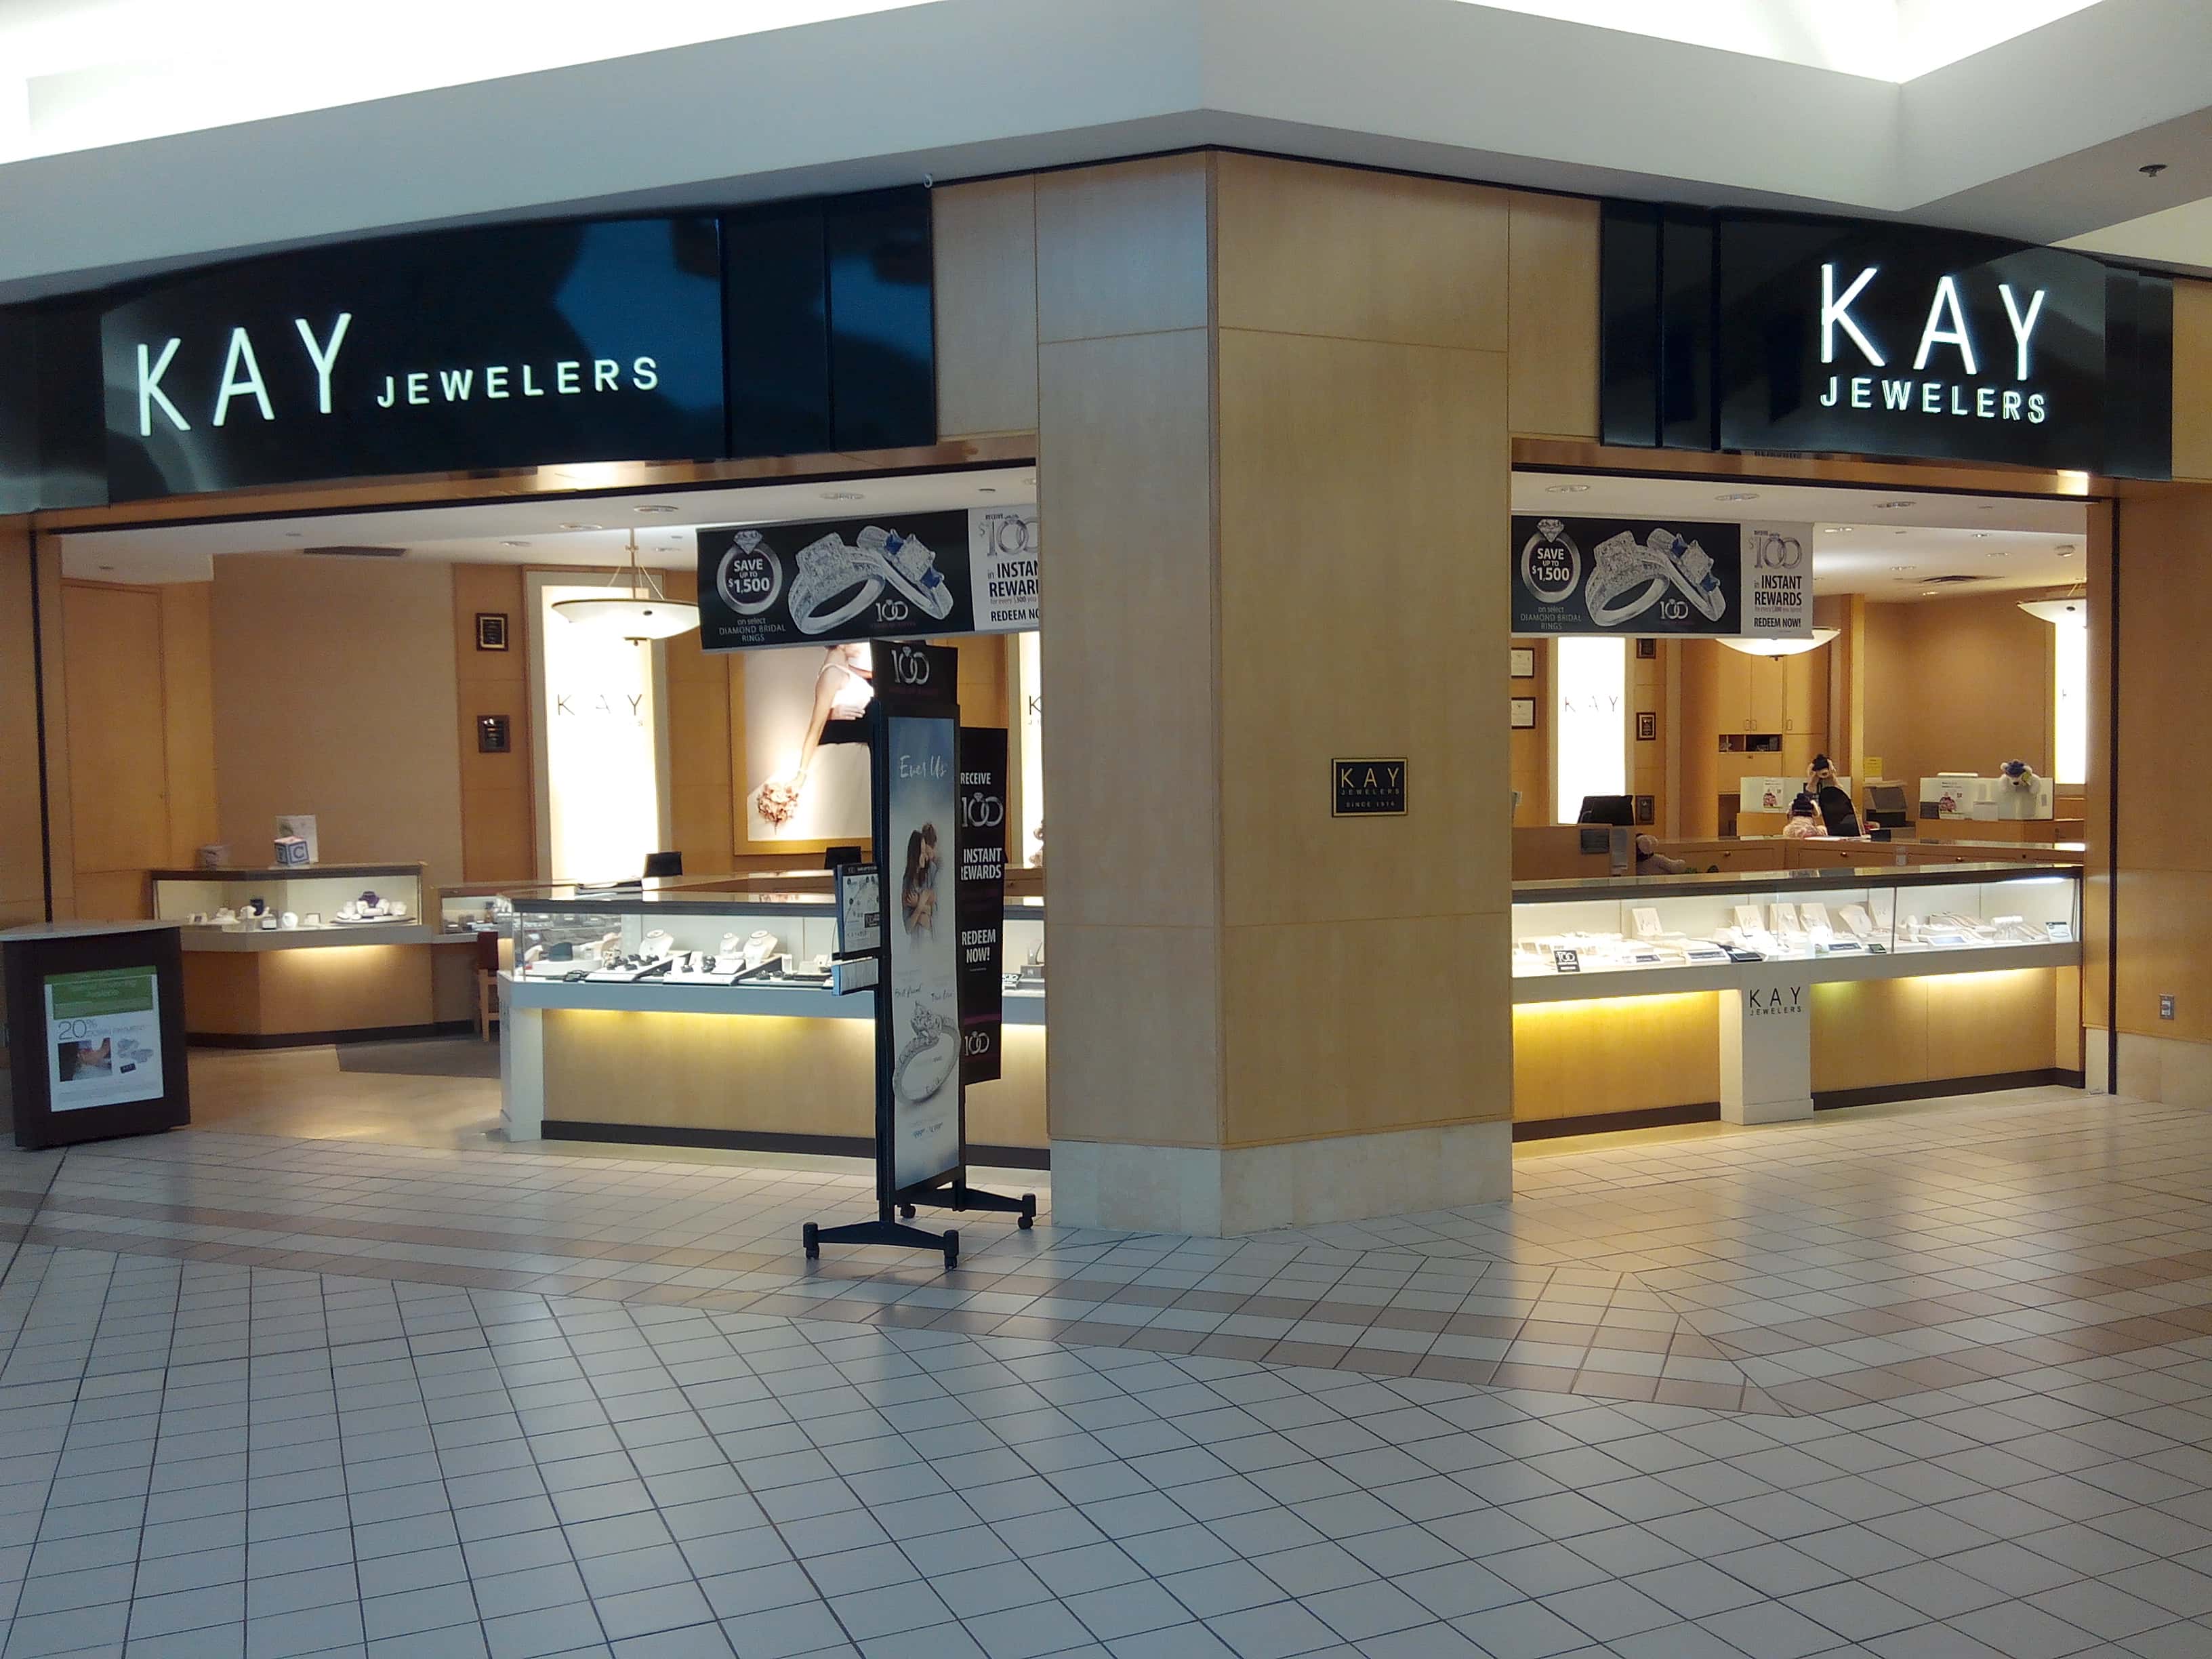 Kay Jewelers - Mankato (MN 56001), US, a jewellers